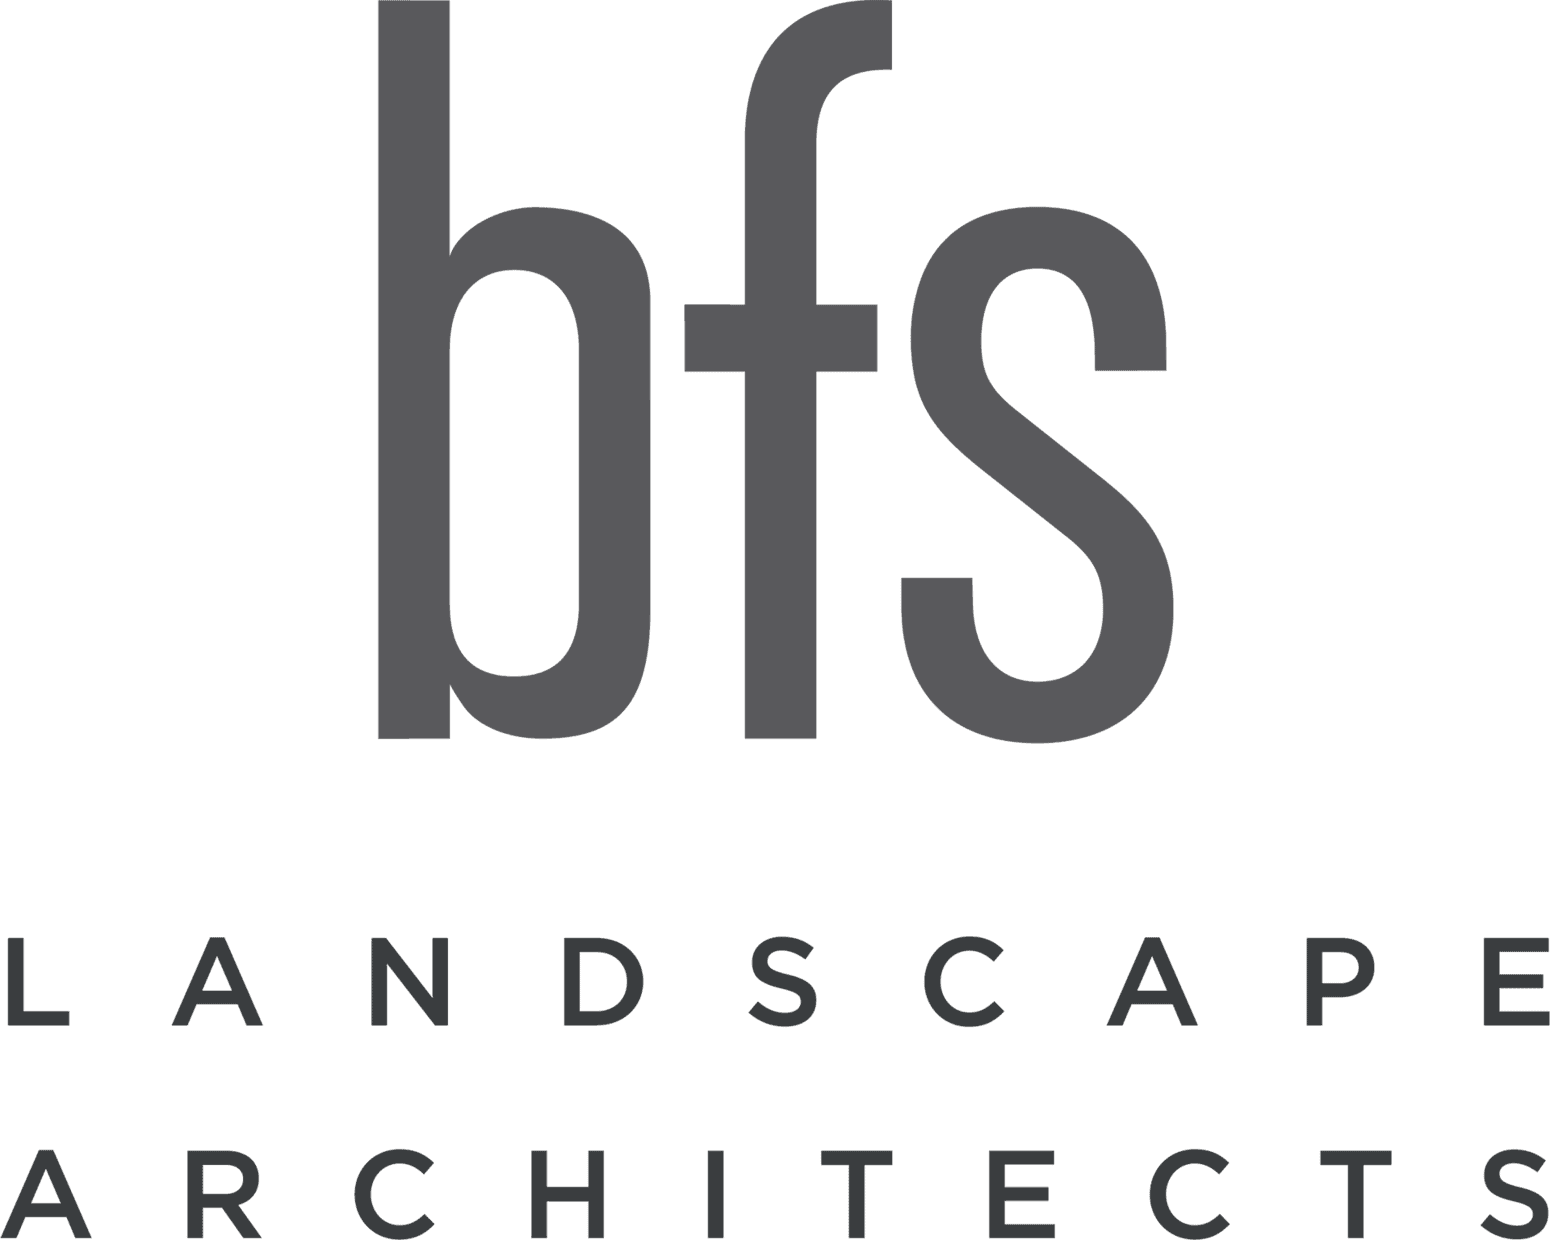 Bfs Landscape Architects Wordmark Grayscale